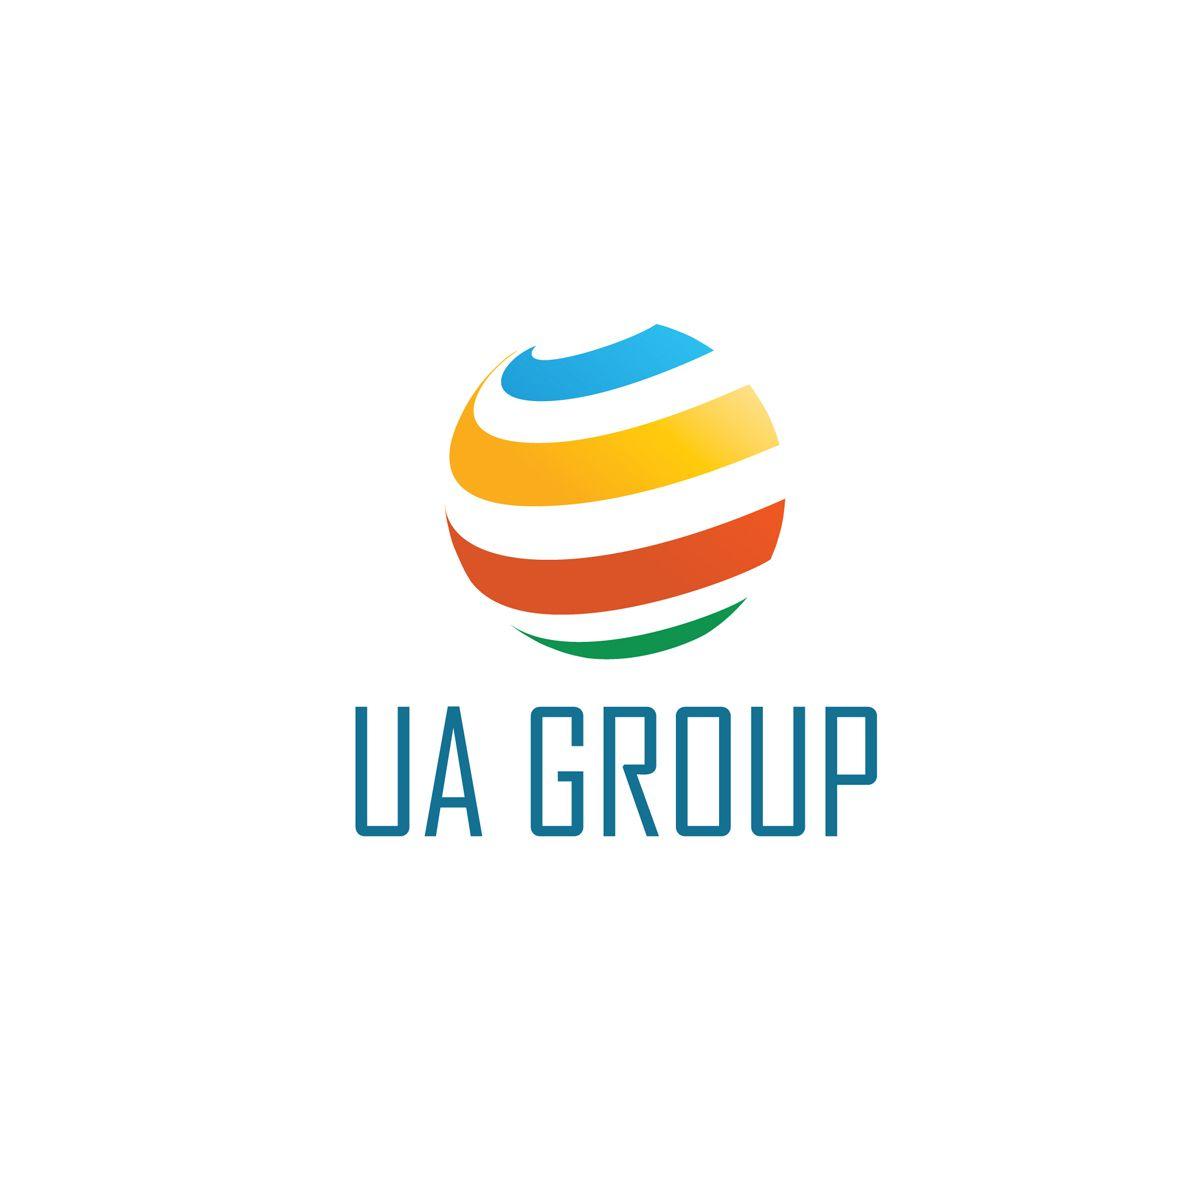 The Globe Logo - Kele Wilson's Globe Logo Wins The UA Group Logo Design Contest